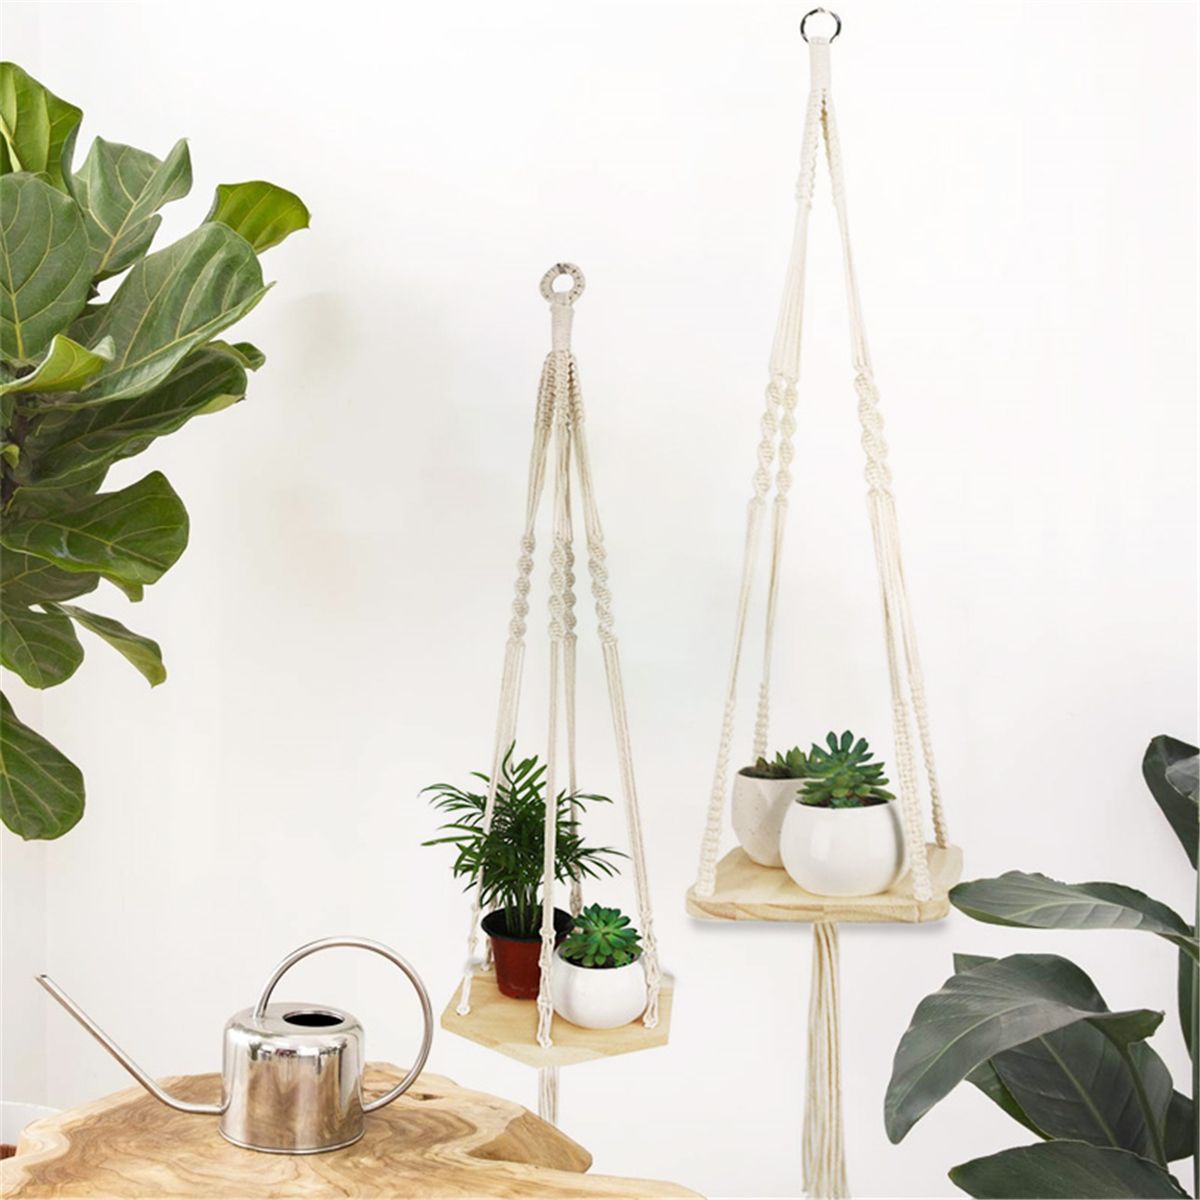 Plant-Hanger-Indoor-Outdoor-Hanging-Plant-Holder-Hanging-Planter-Stand-Flower-Pots-for-Decorations-1729387